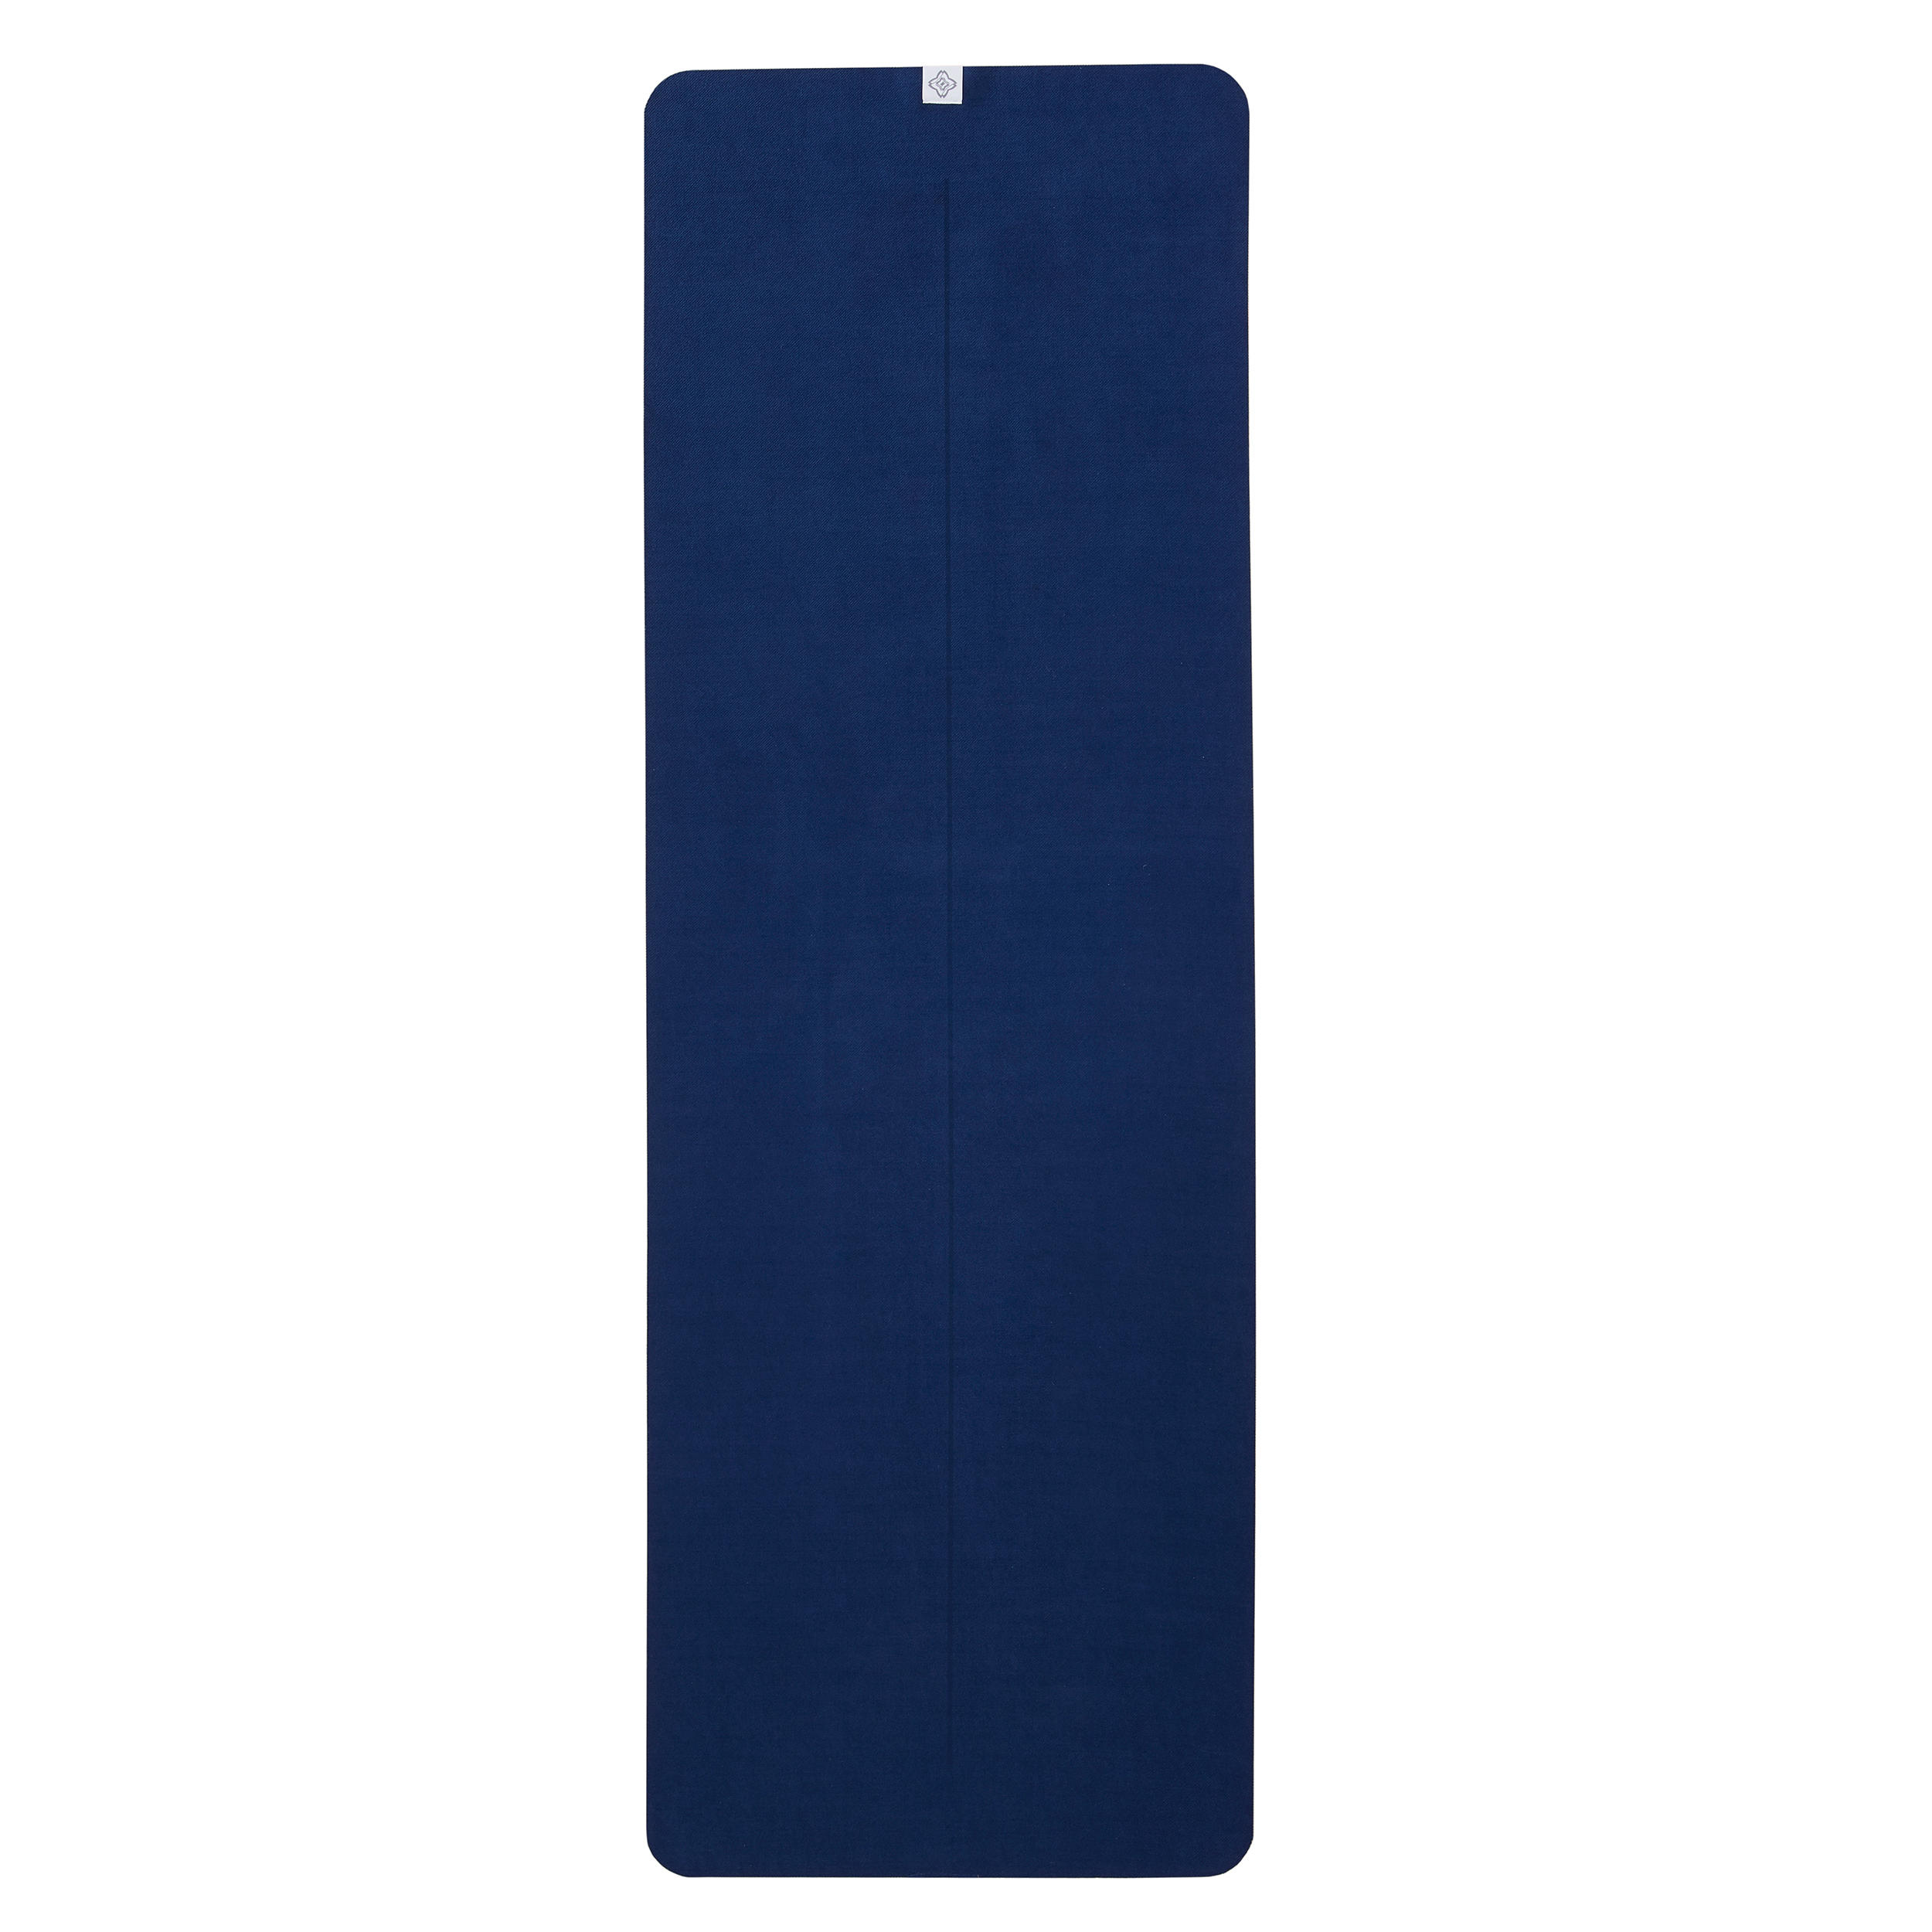 Sell Alo Yoga No- Slip Mat Towel - Blue